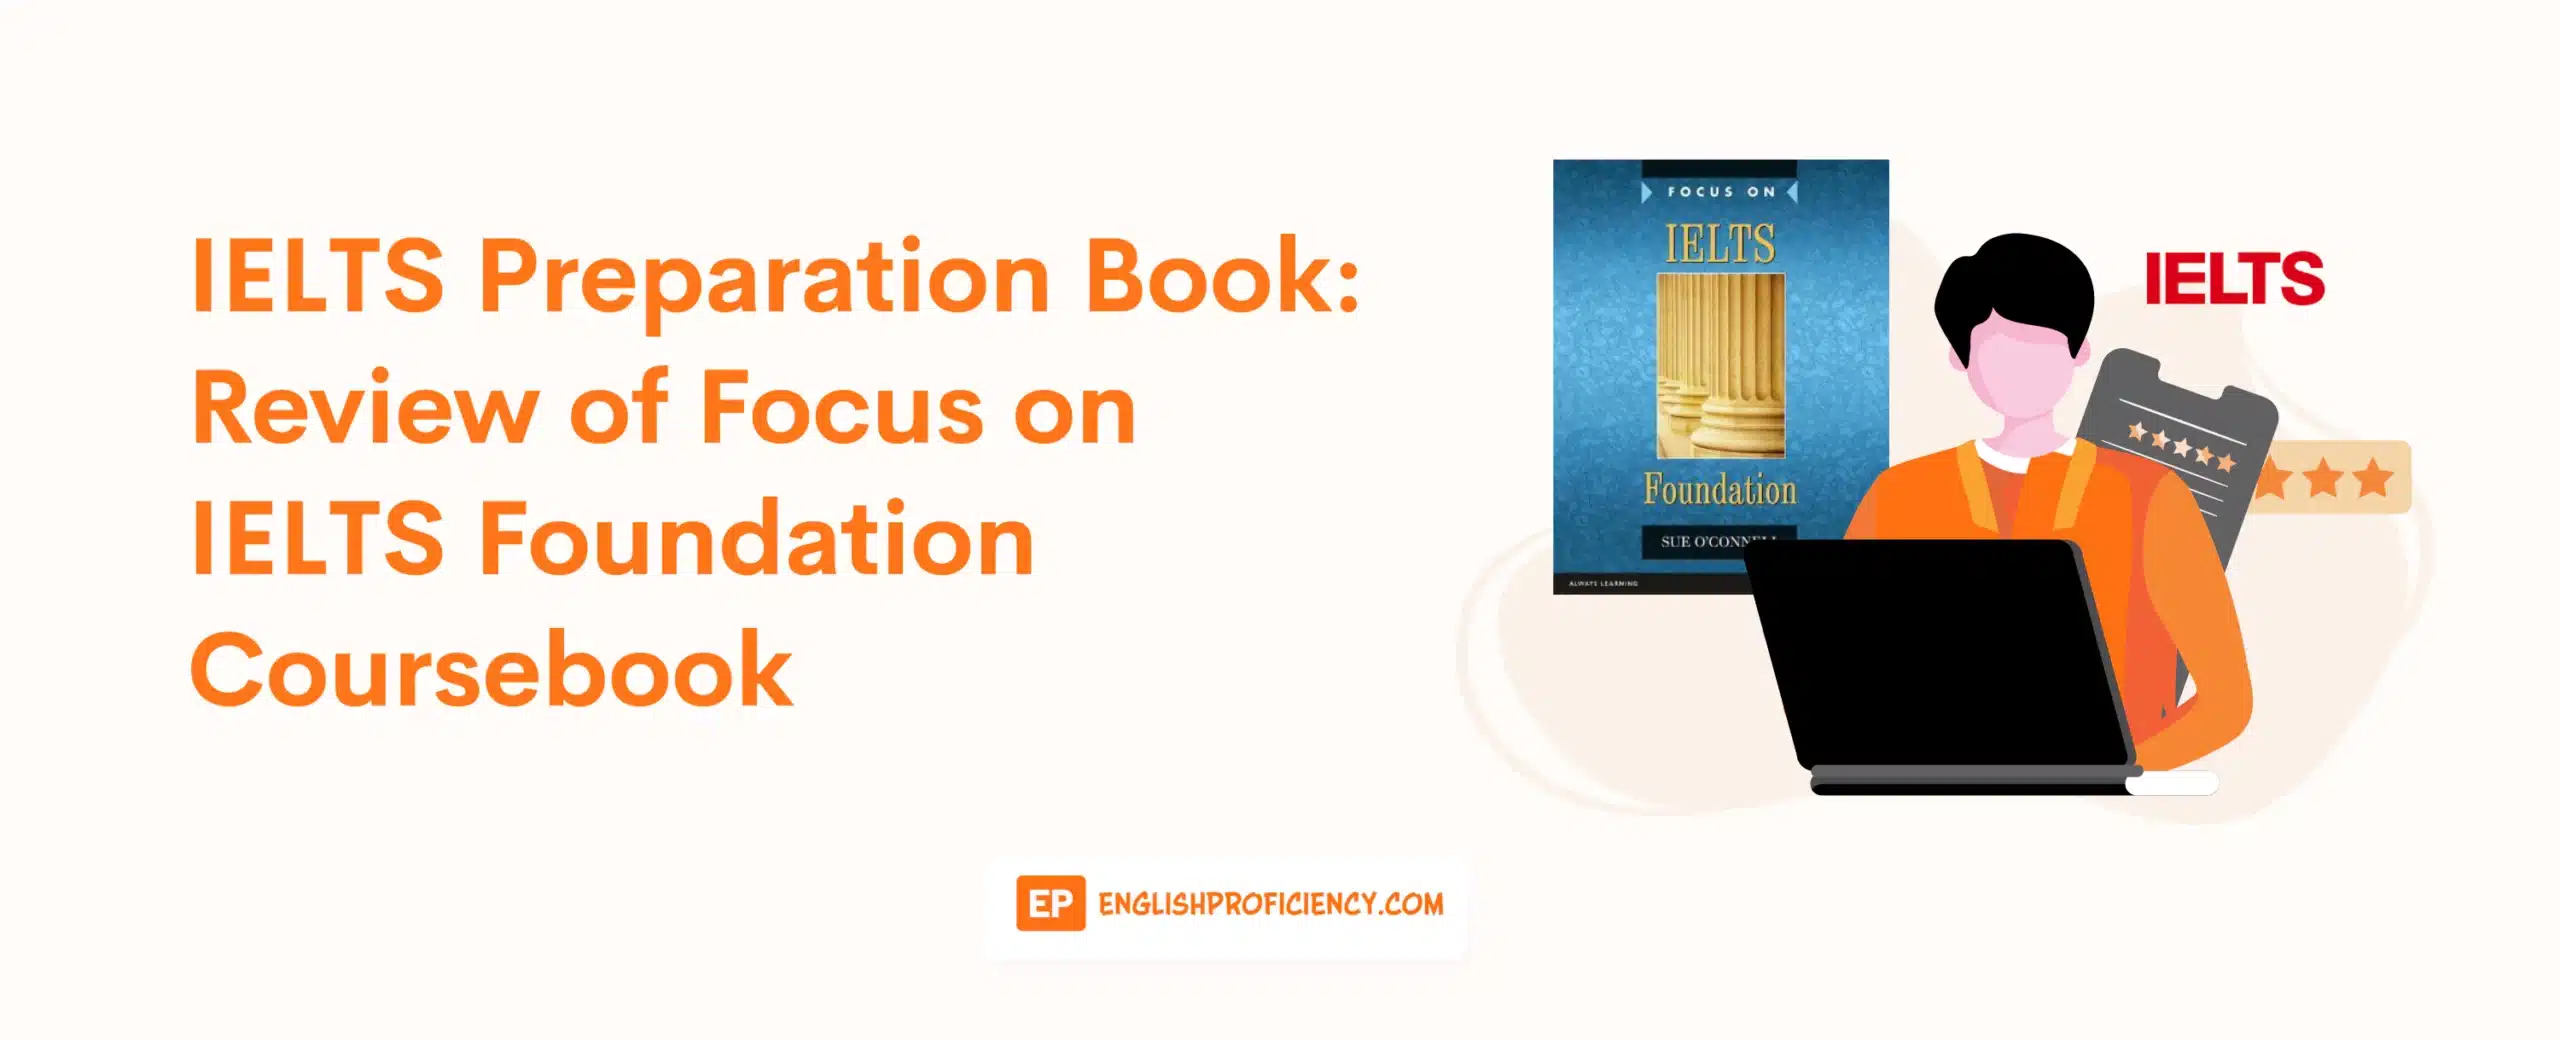 IELTS Preparation Book Review of Focus on IELTS Foundation Coursebook